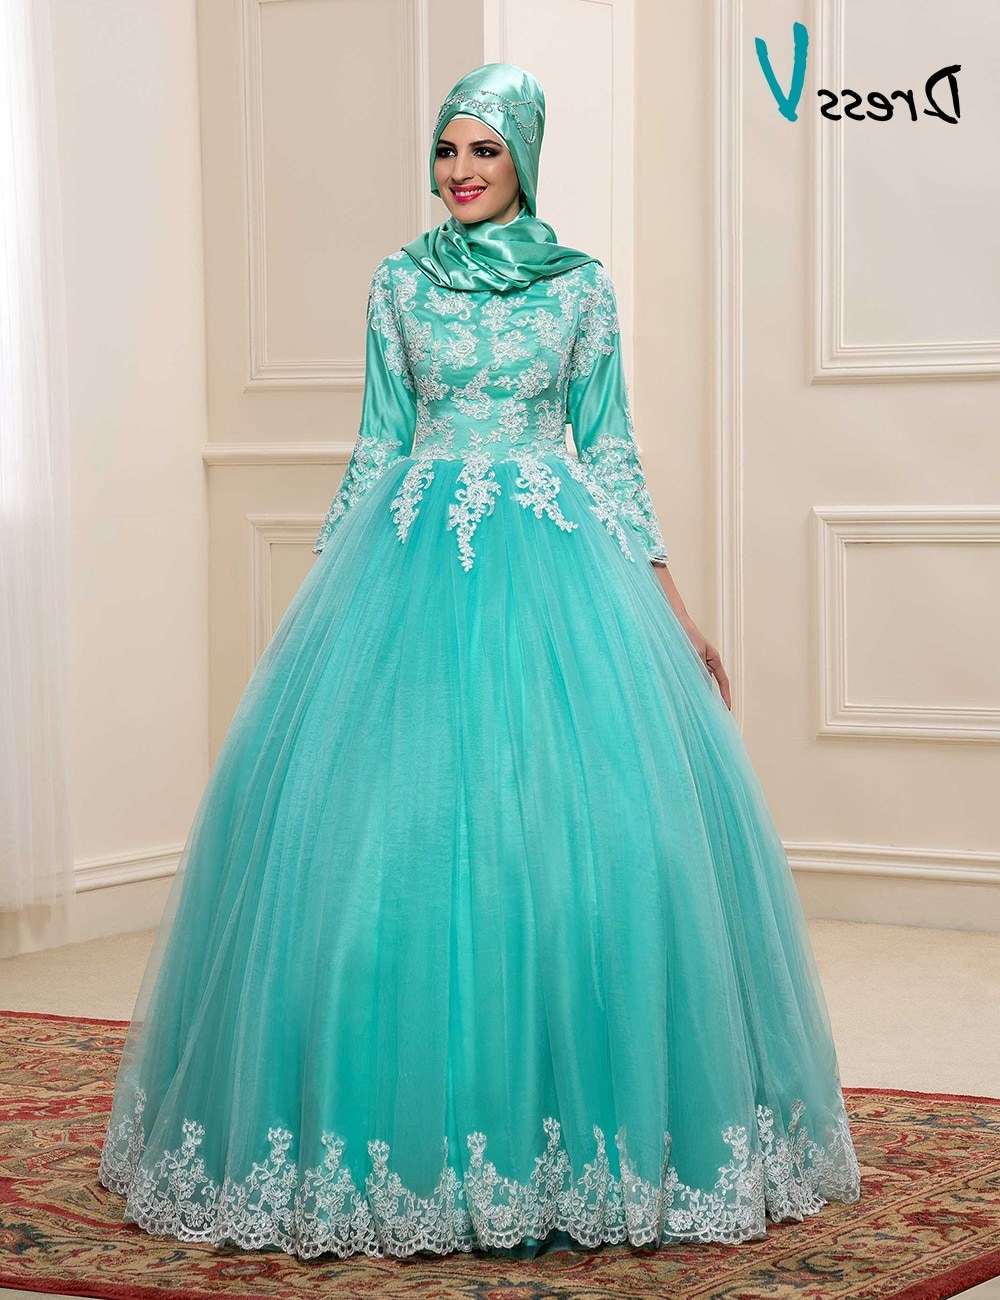 Ide Baju Pengantin Muslim Modern 2016 0gdr islamic Hijab Wedding Dresses – Fashion Dresses